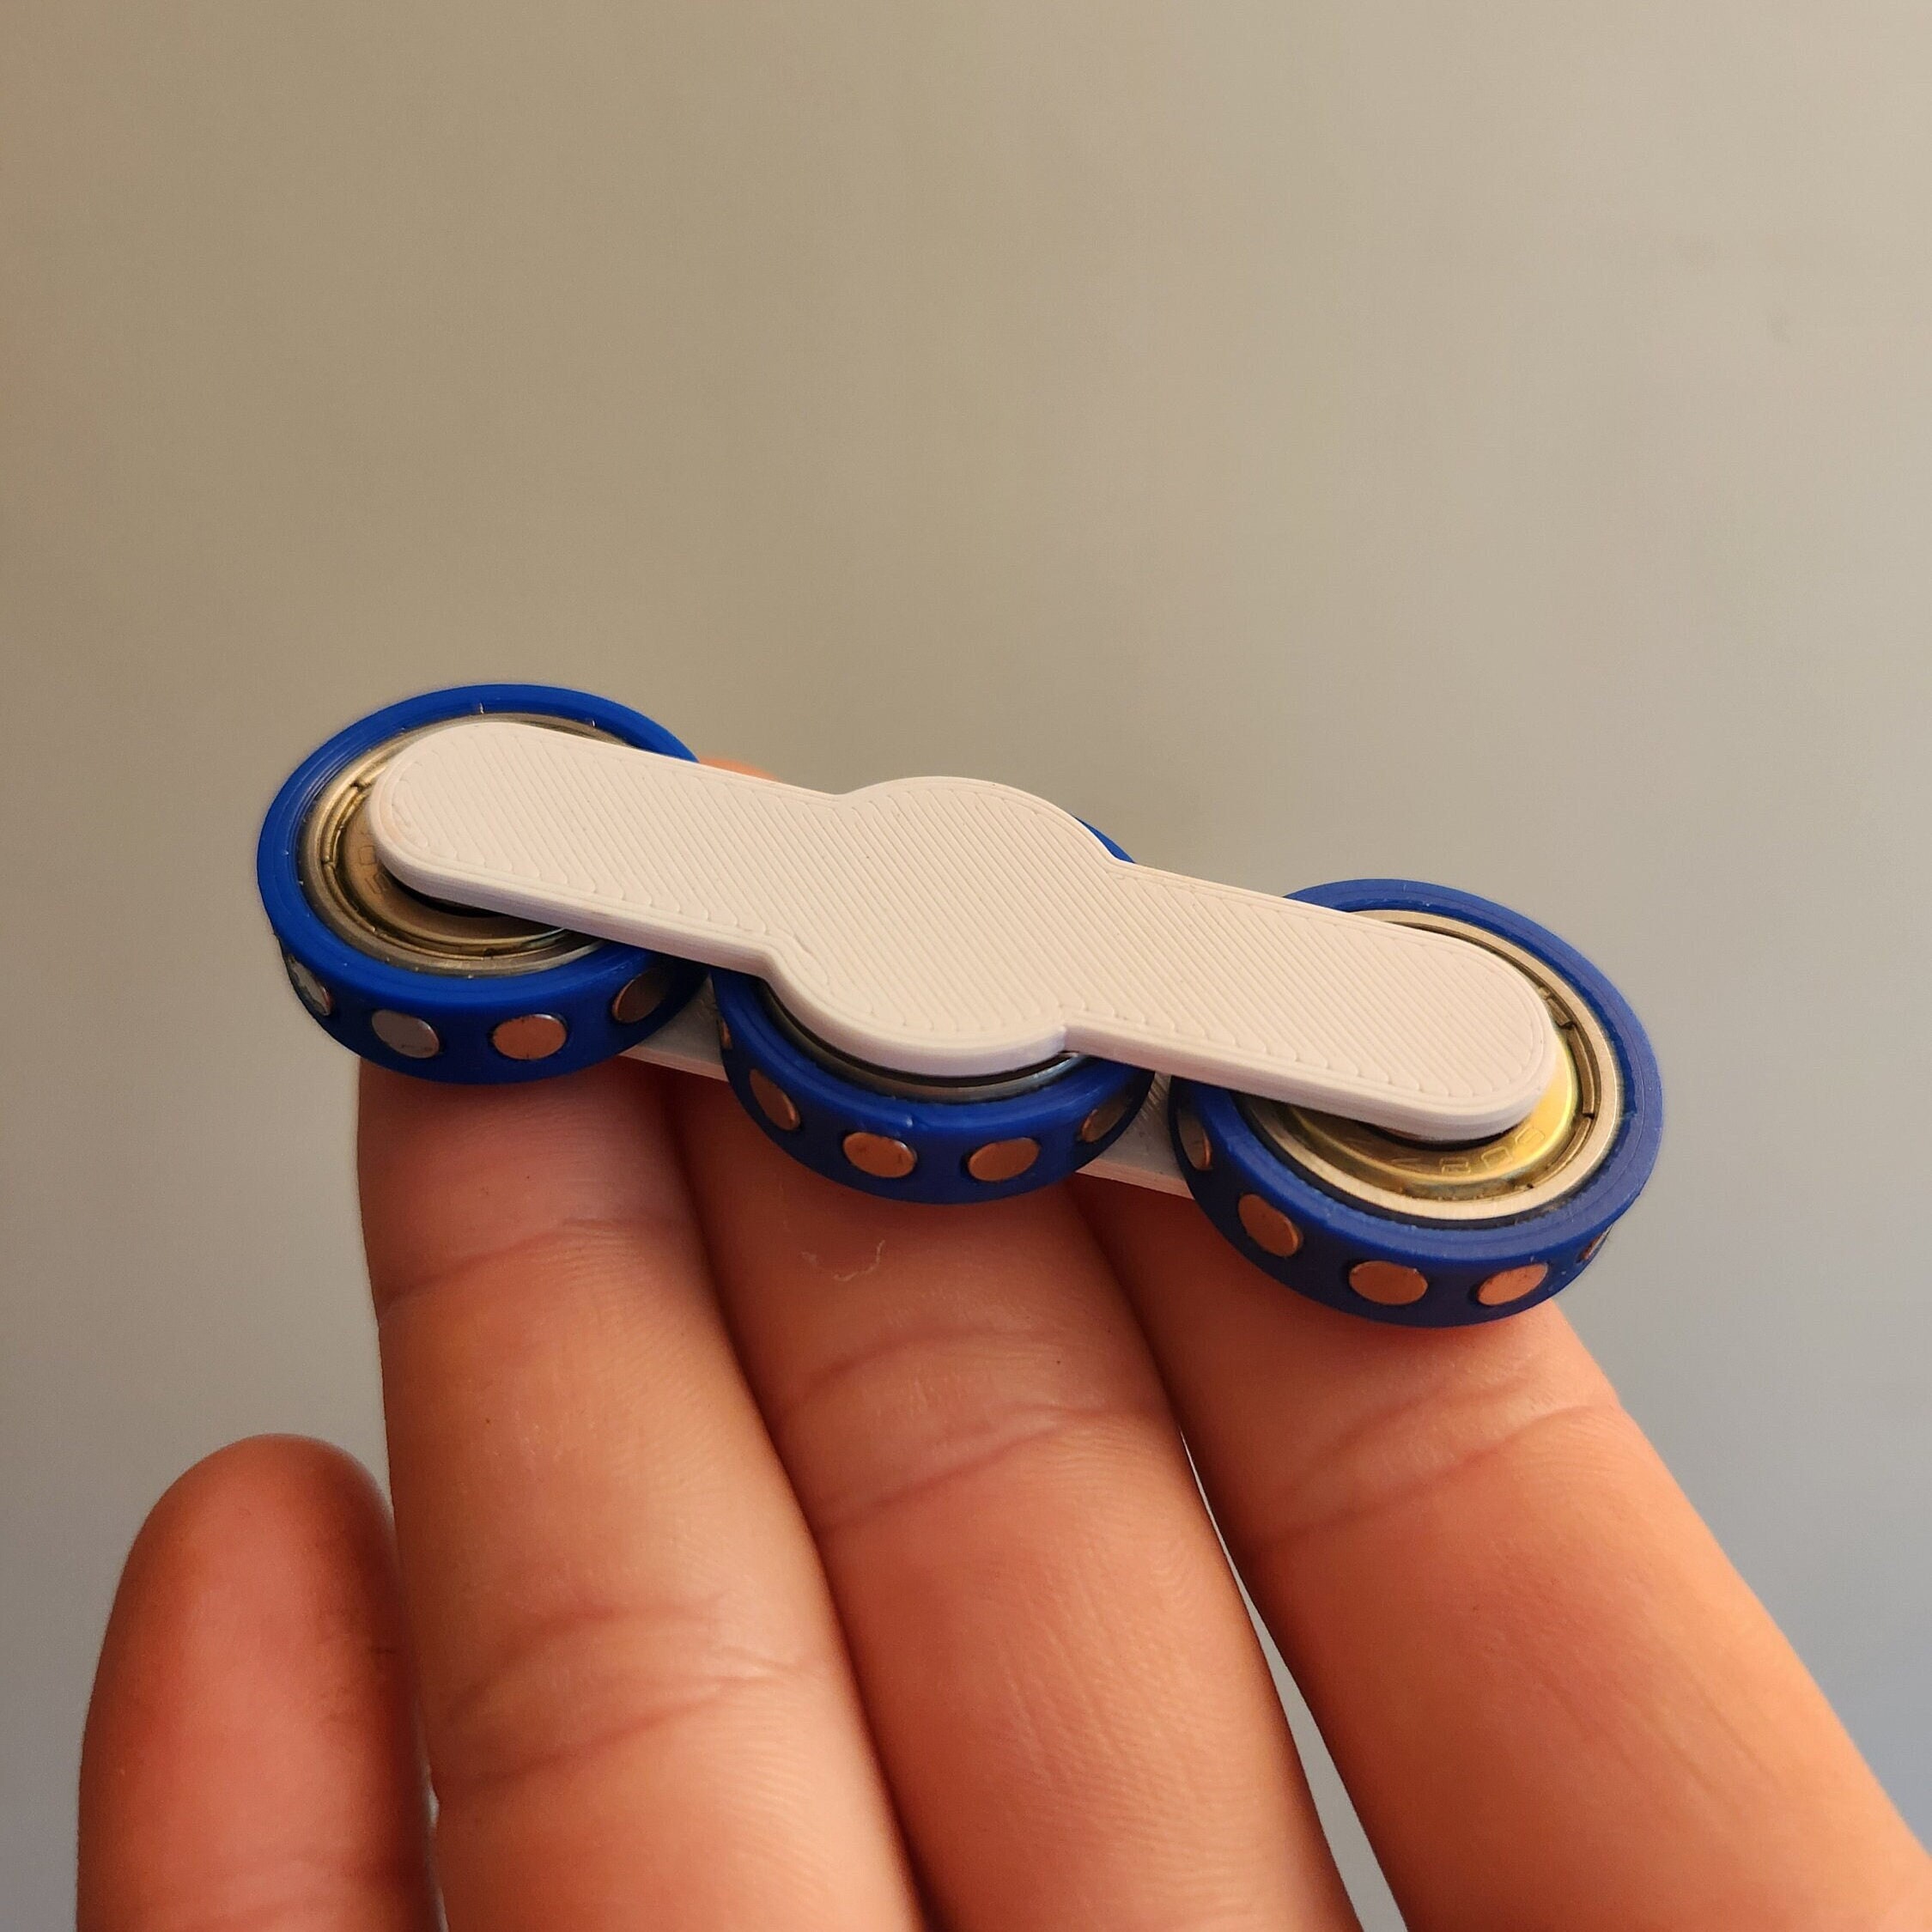 Magnetic Bar Fidget Toy Adult Stress Relief Magnet Antistress Fingertip Toy  Gift